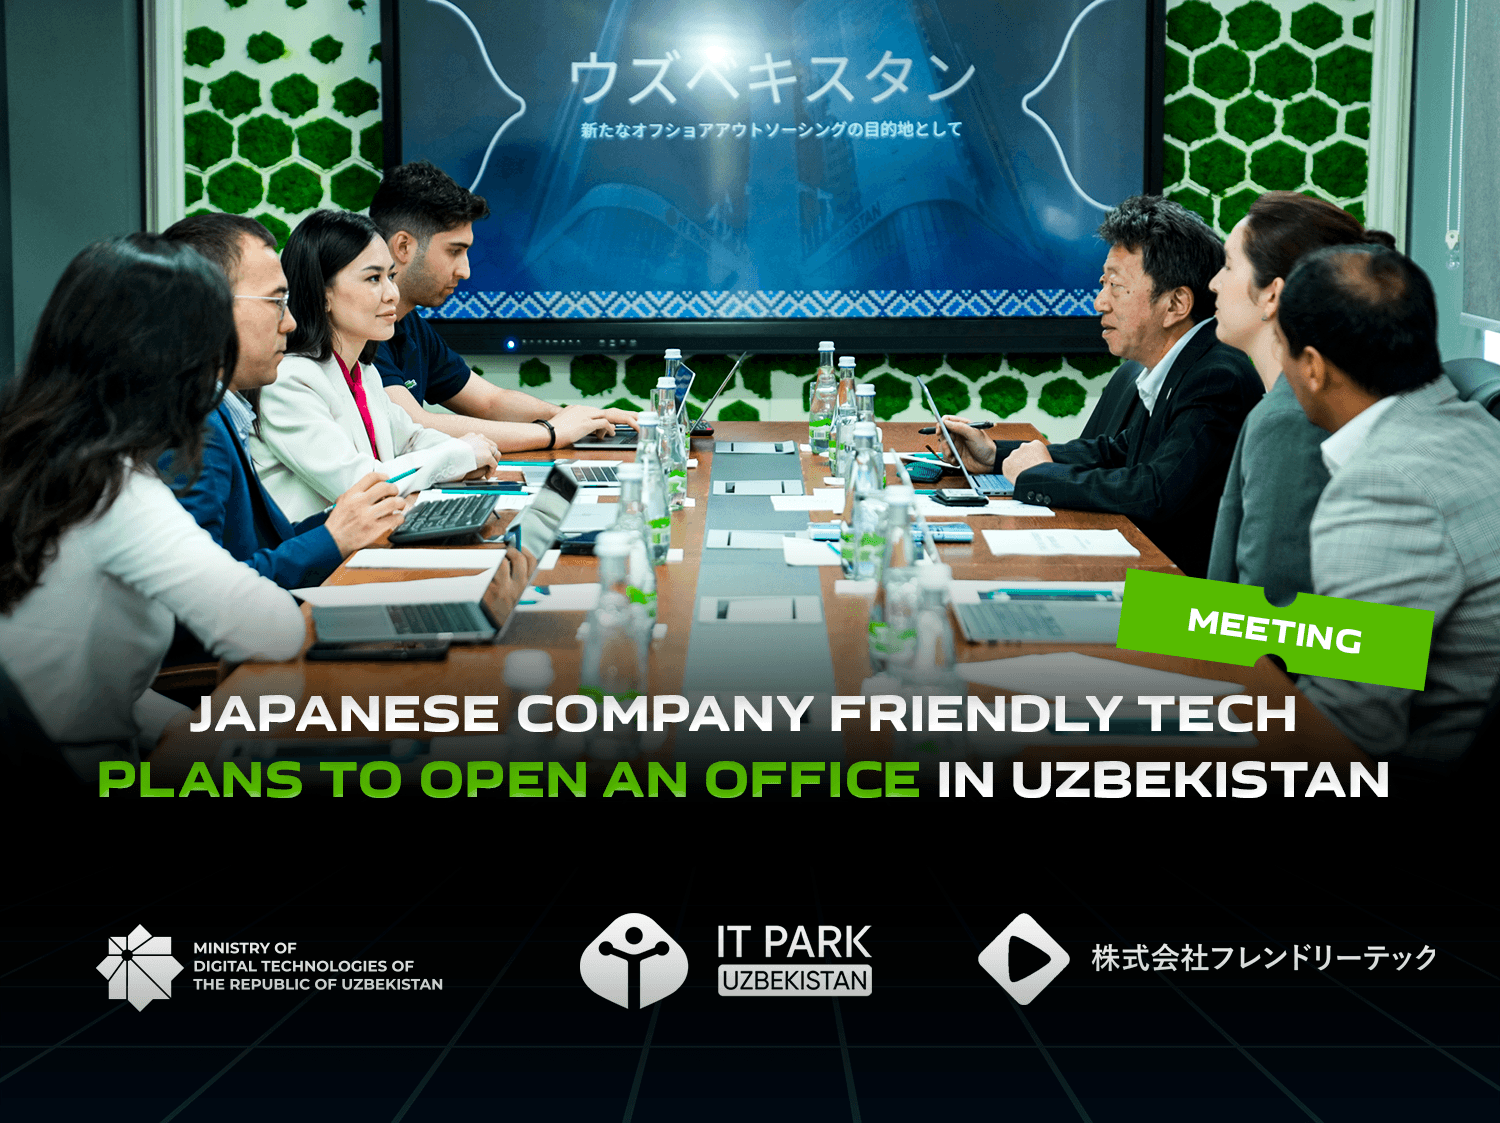 Japanese company Friendly Tech plans to open an office in Uzbekistan